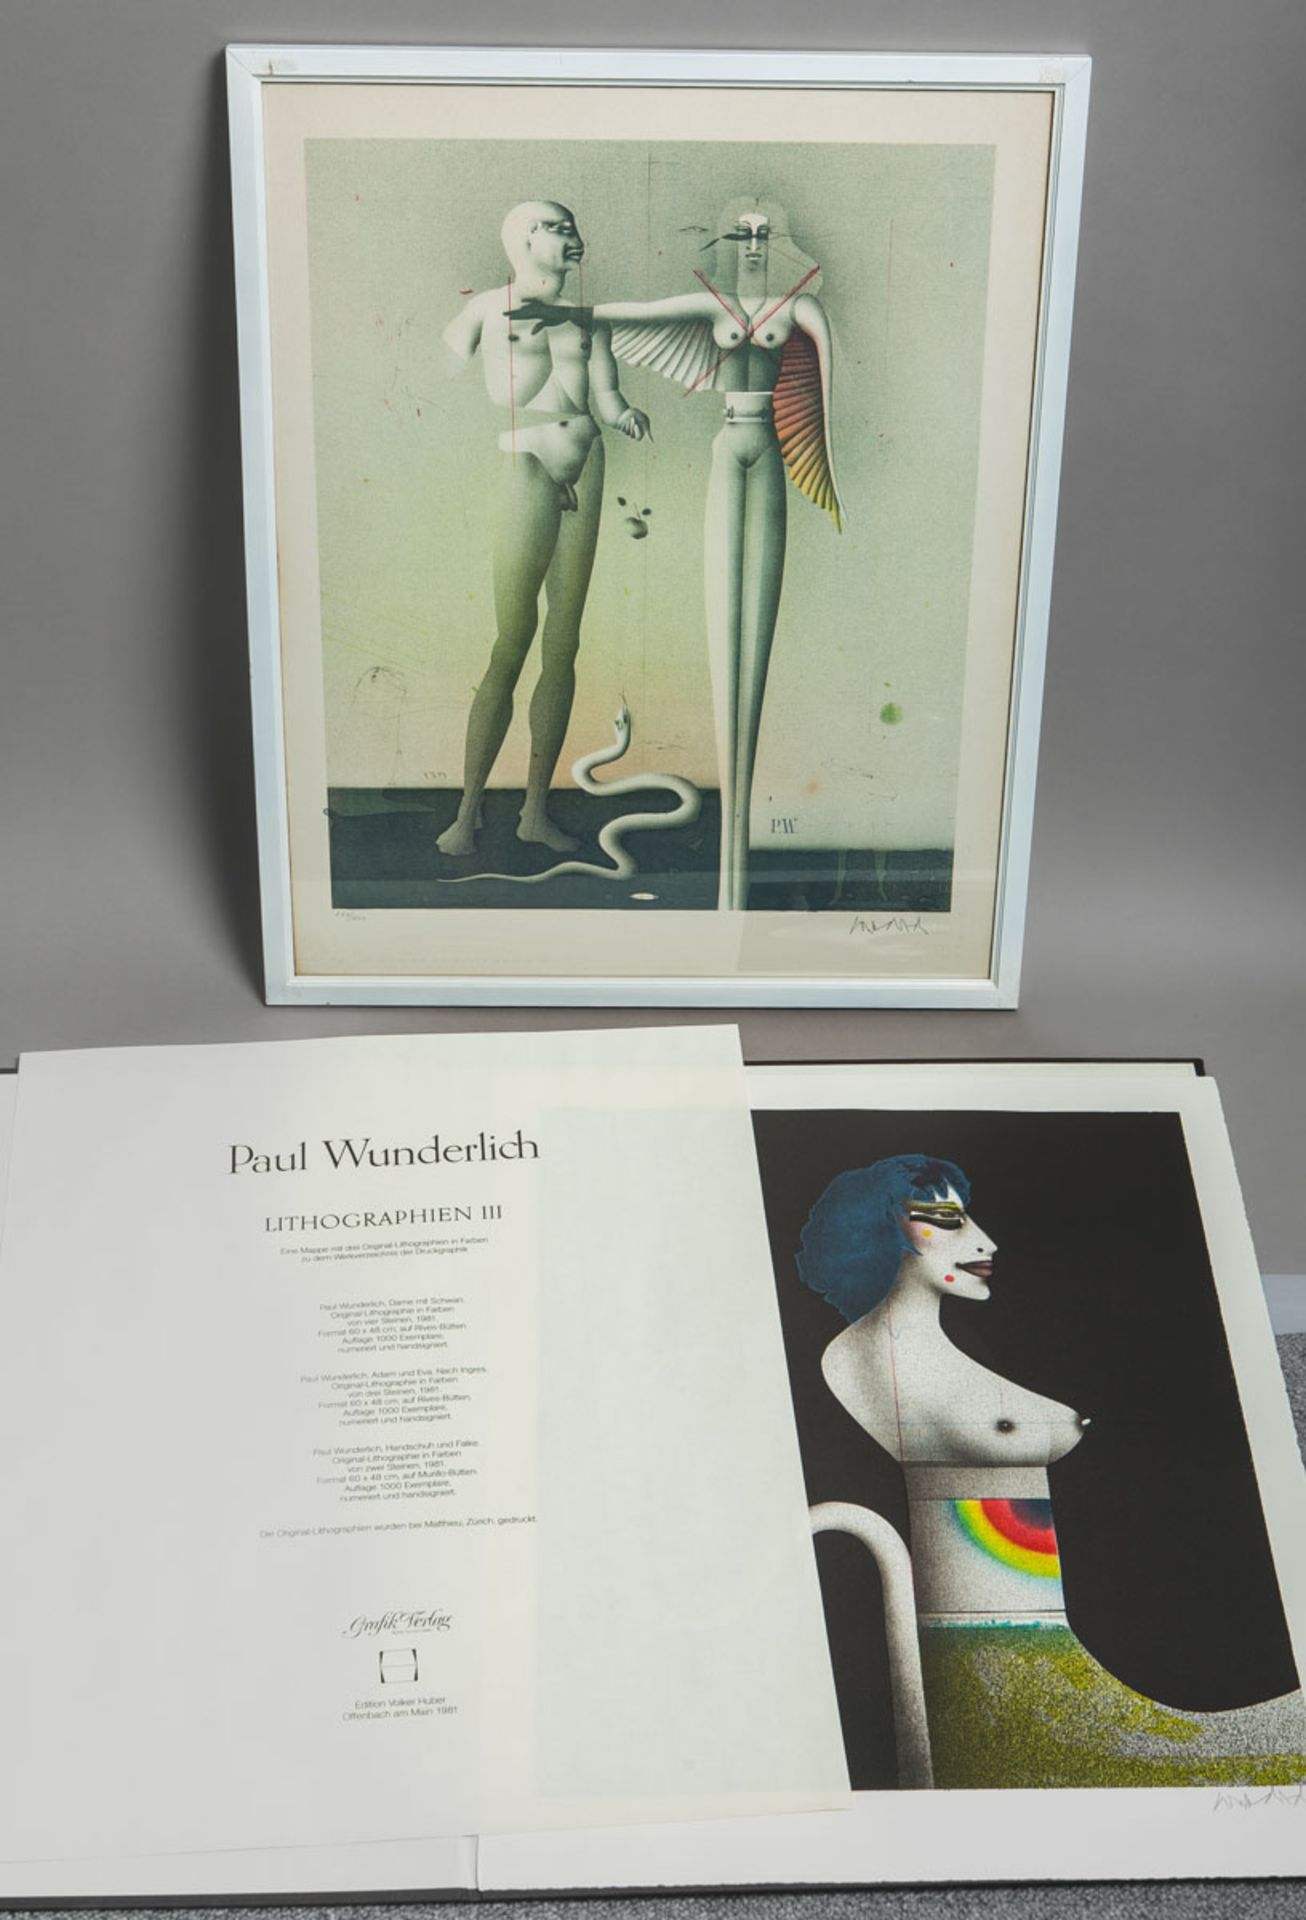 Wunderlich, Paul (1927 - 2010), Mappe mit 2 Lithografien "Lithographien 3" (1981)